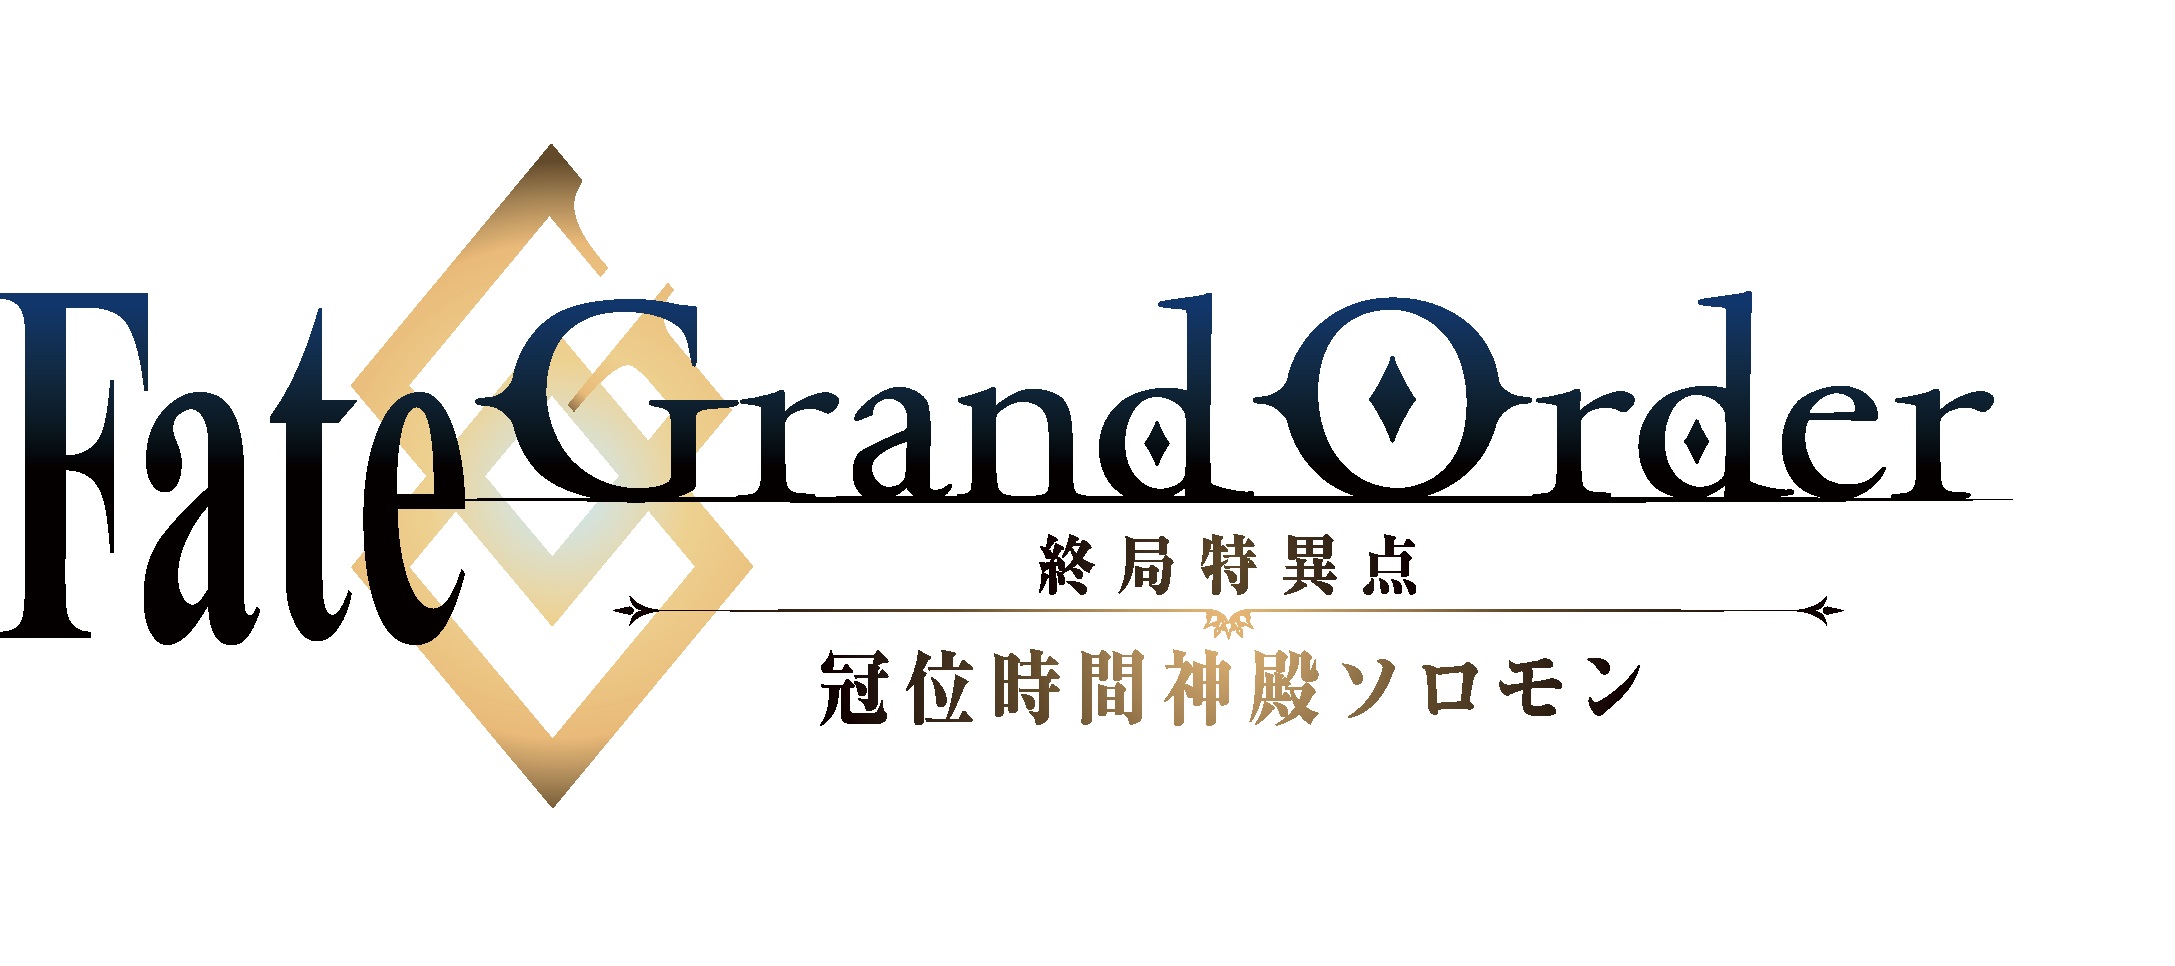 Fate Grand Order 終局特異点 冠位時間神殿ソロモン 上映劇場決定 株式会社アニプレックスのプレスリリース